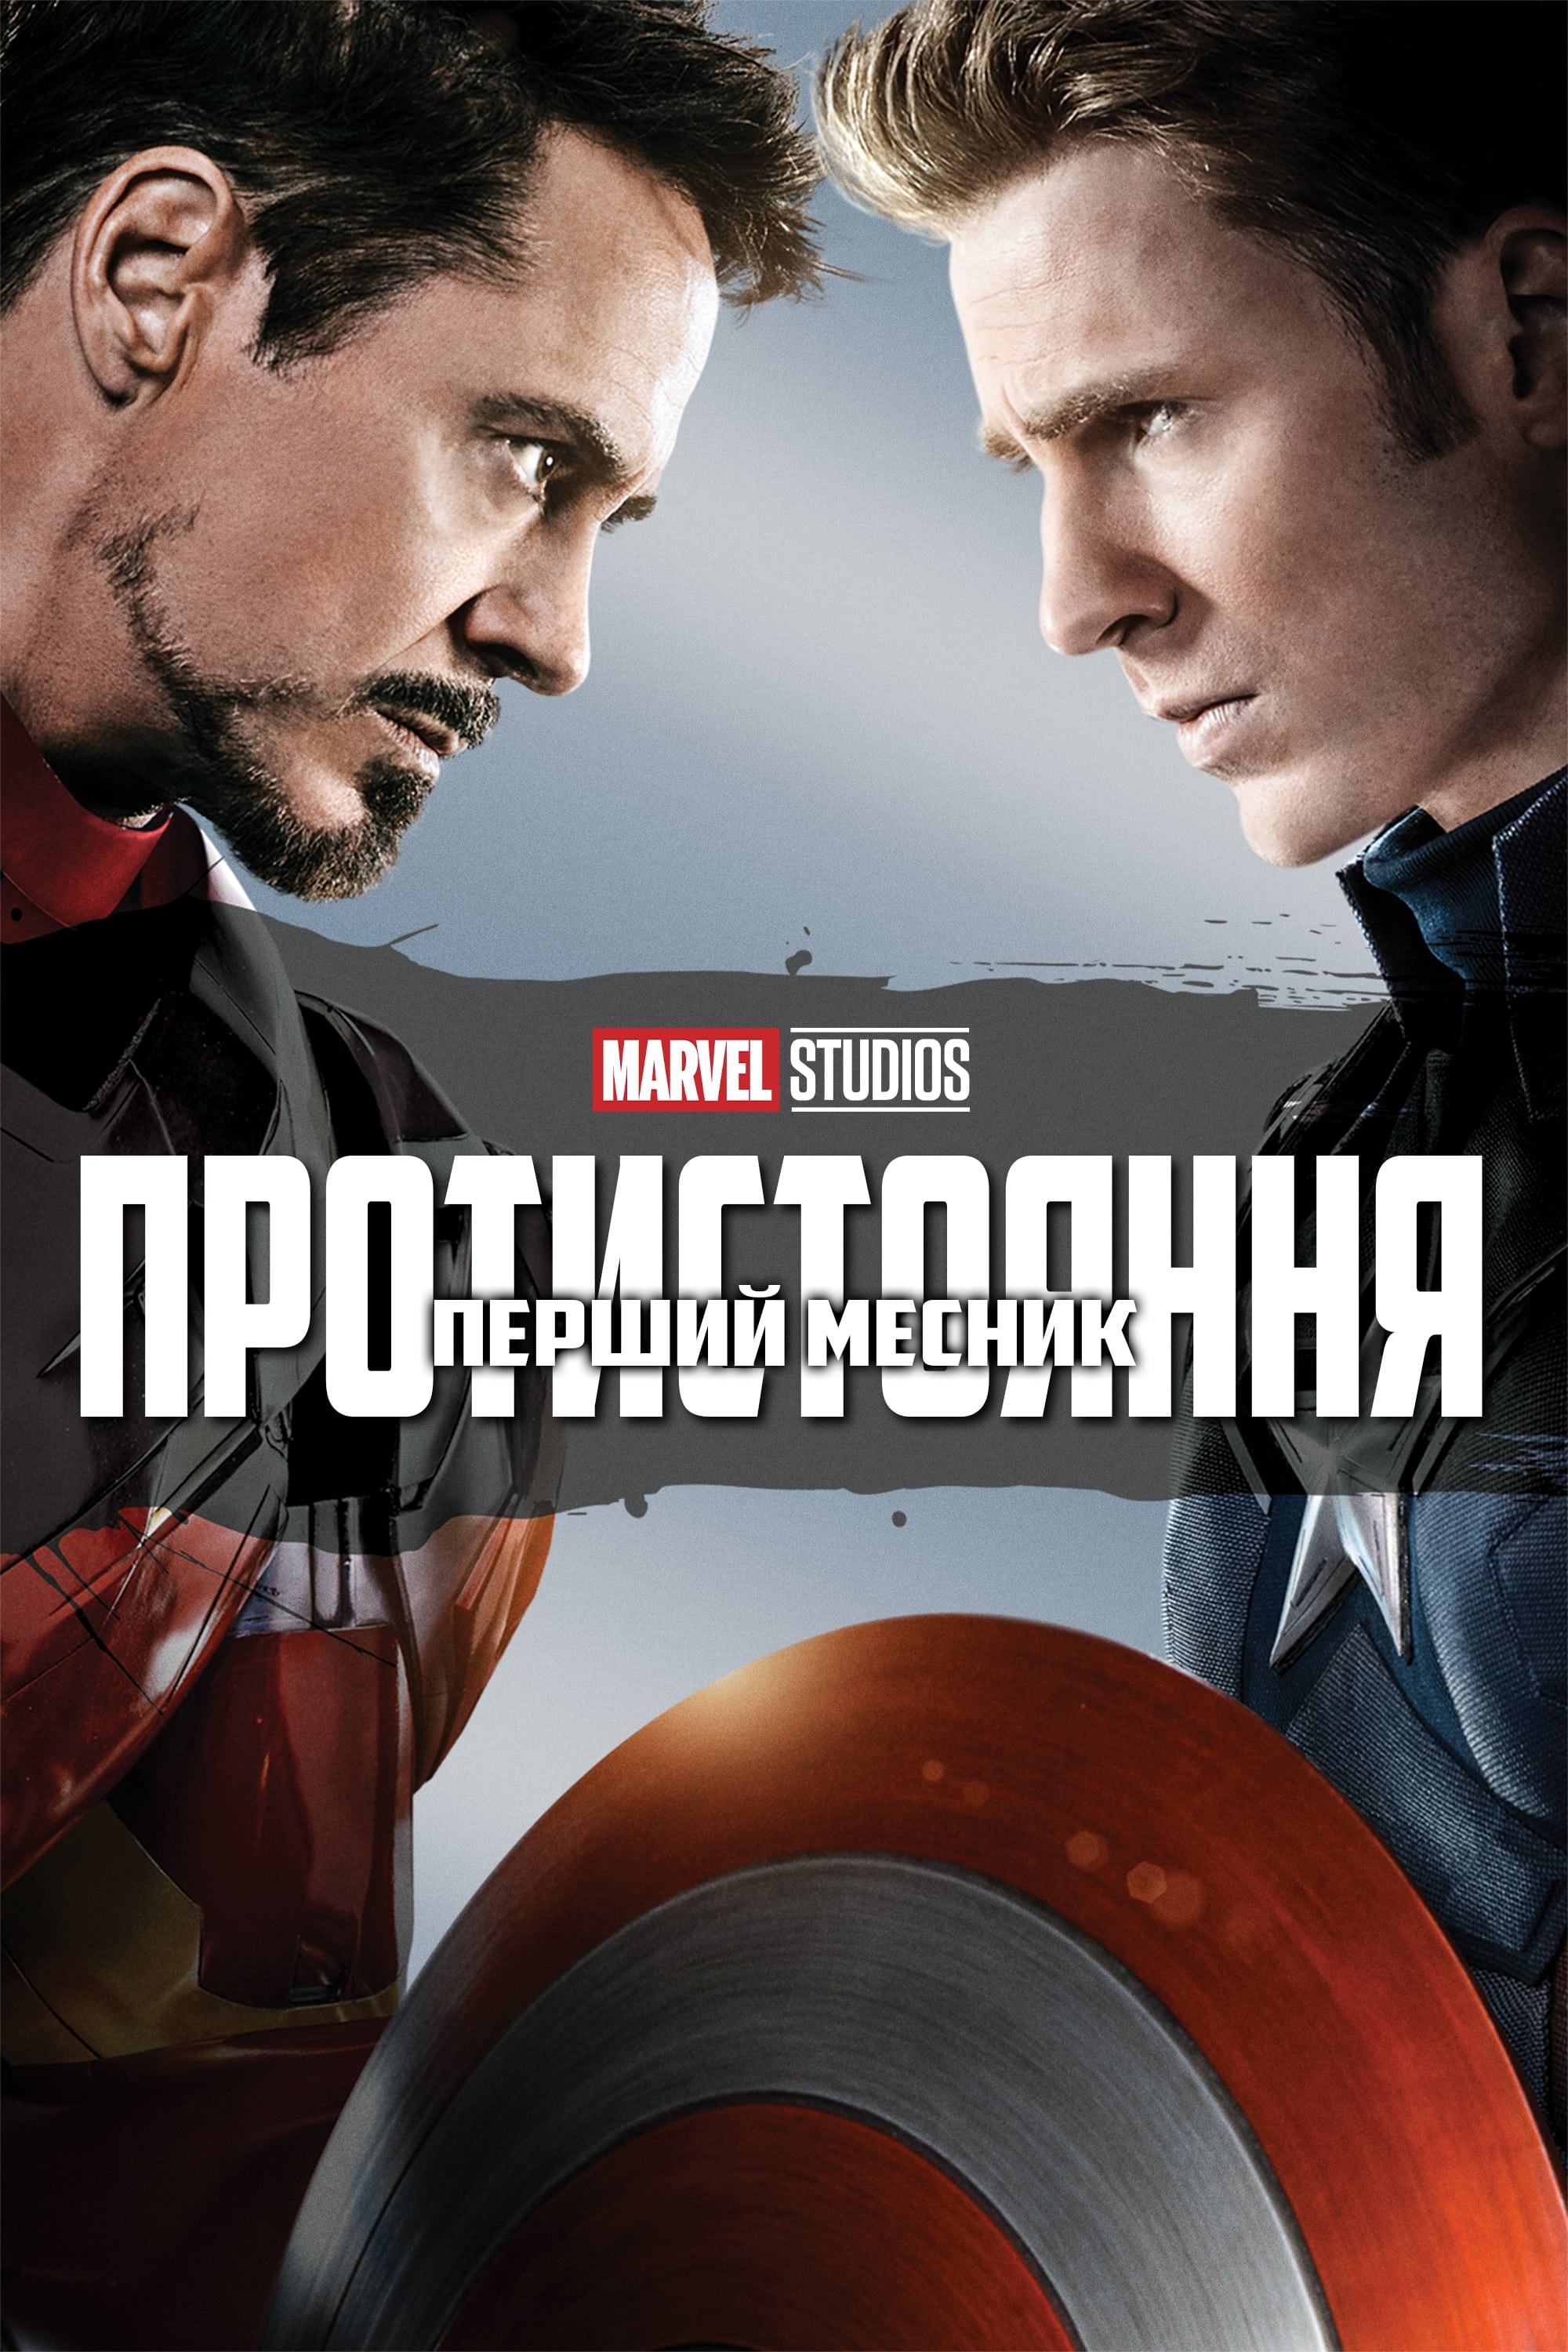 Captain America: Civil War 2016 movie mp4 mkv download - Starazi.com